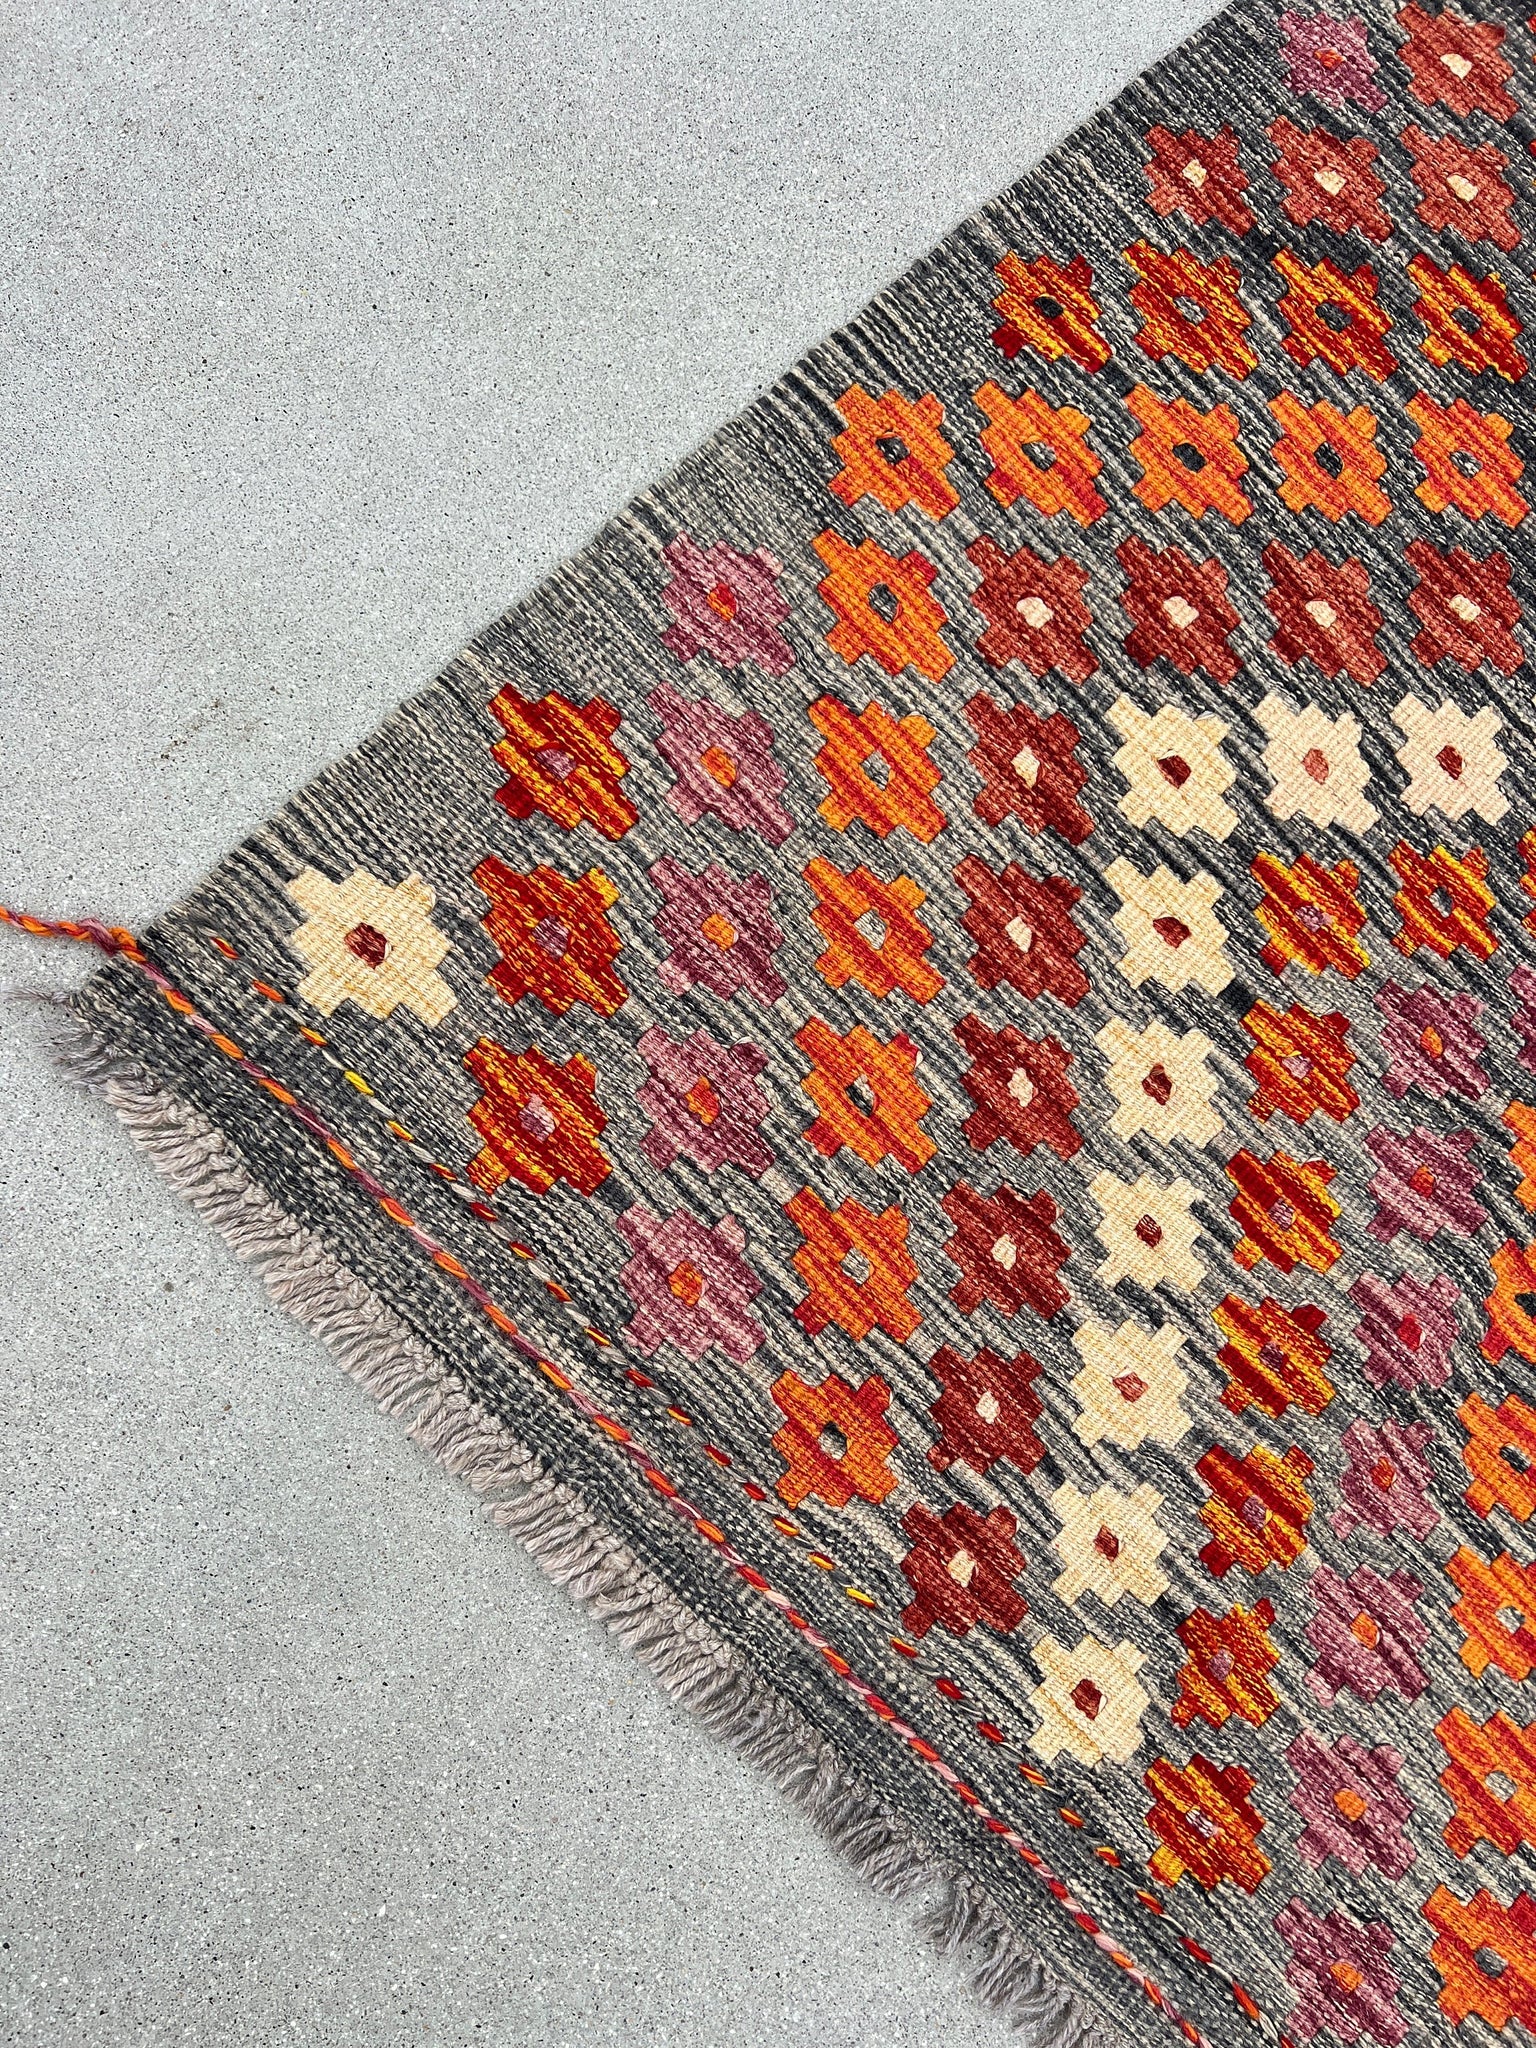 4x5 (120x150) Handmade Afghan Kilim Rug | Colorful Grey Burnt Orange Mauve Blood Red Maroon Cream Beige | Flatweave Geometric Outdoor Wool